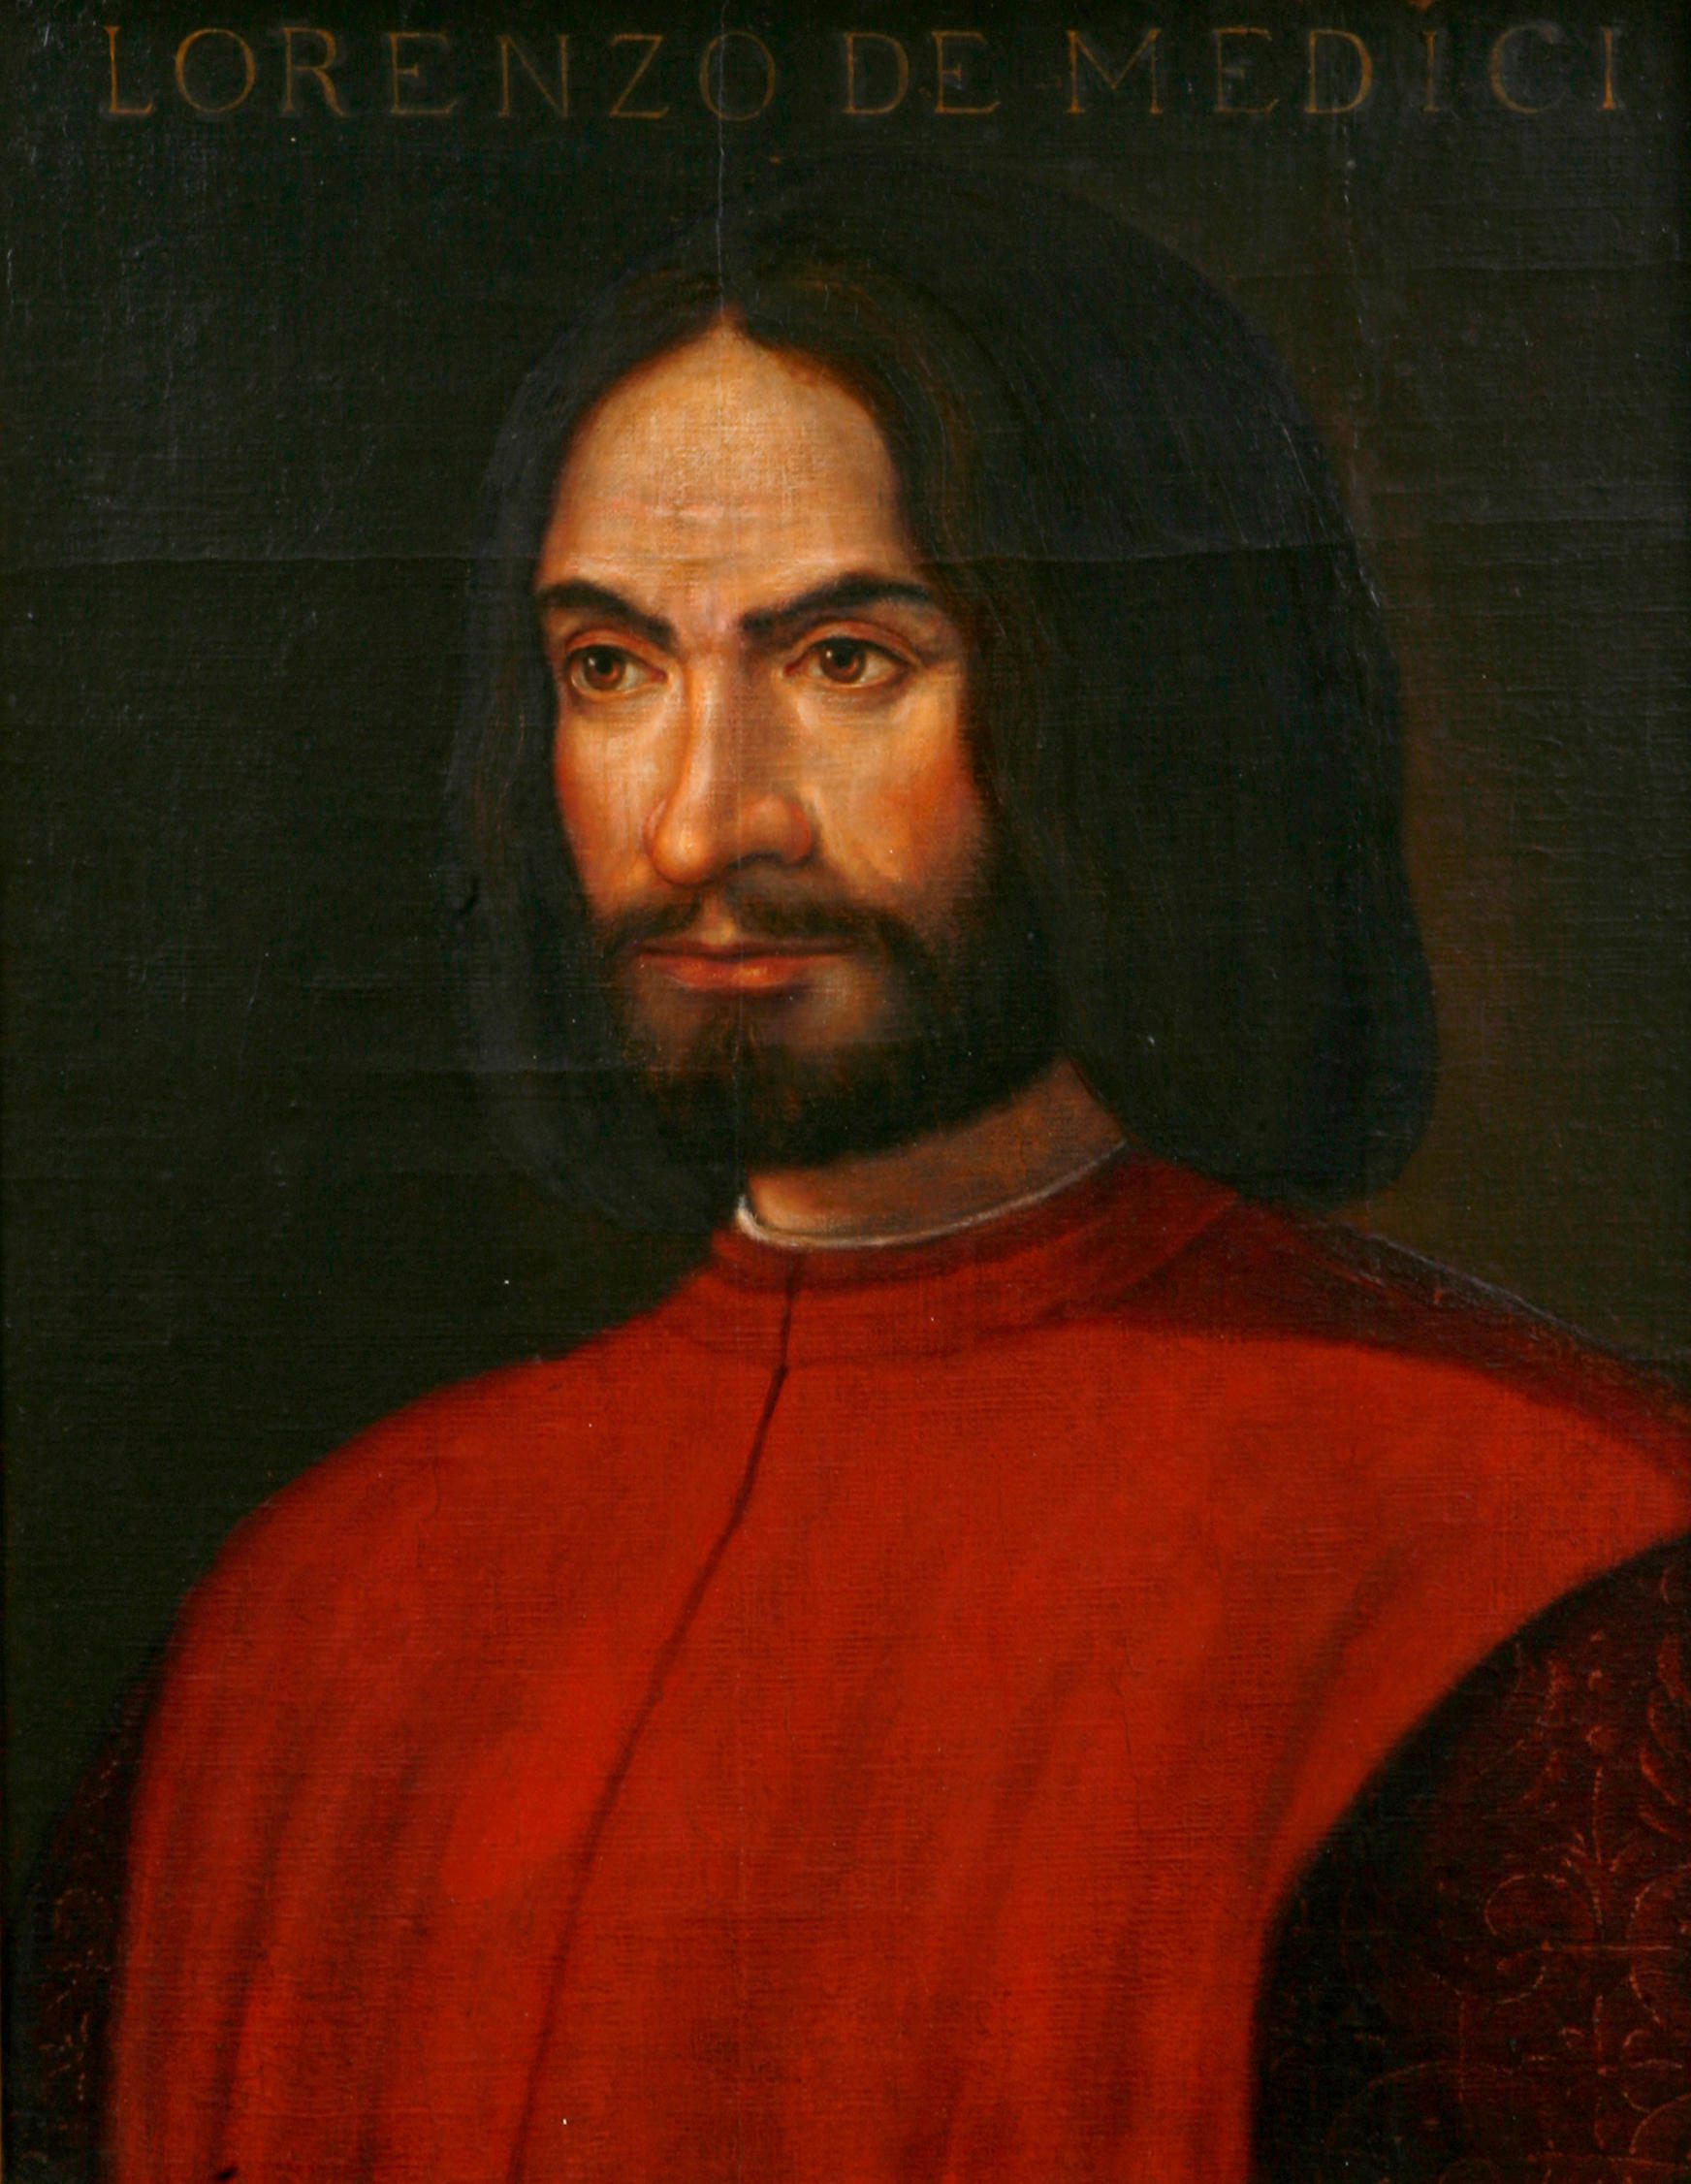 Lorenzo medici. Лоренцо де Медичи. Лоренцо ди Пьеро де Медичи великолепный. Лоренцо Медичи портрет. Лоренцо великолепный.